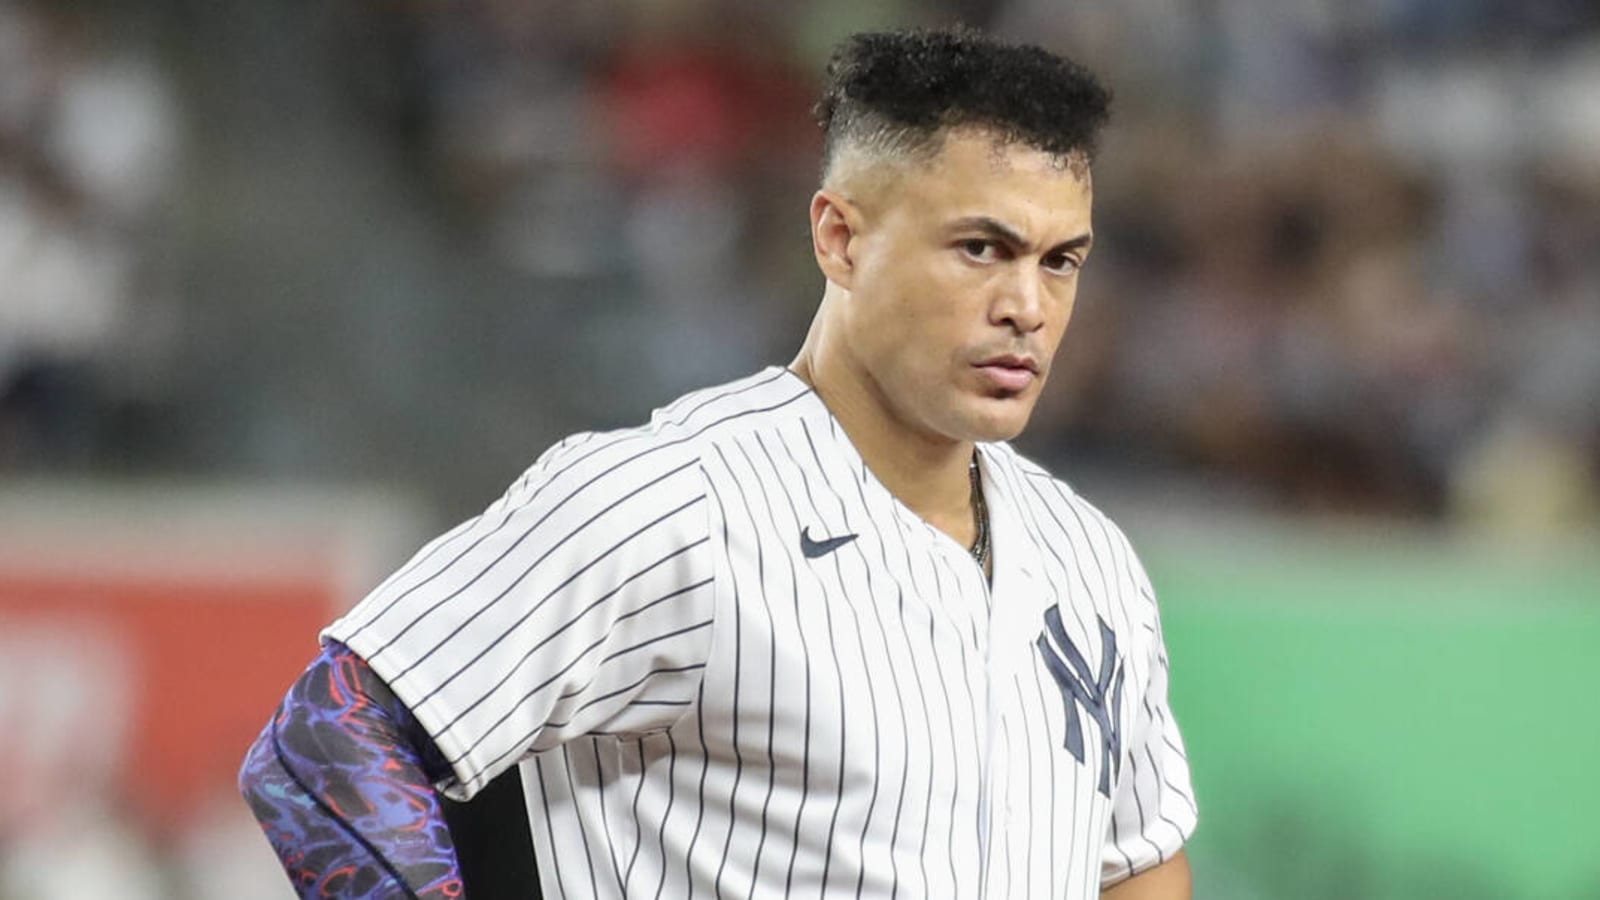 Yankees’ $32 million slugger having career-worst season